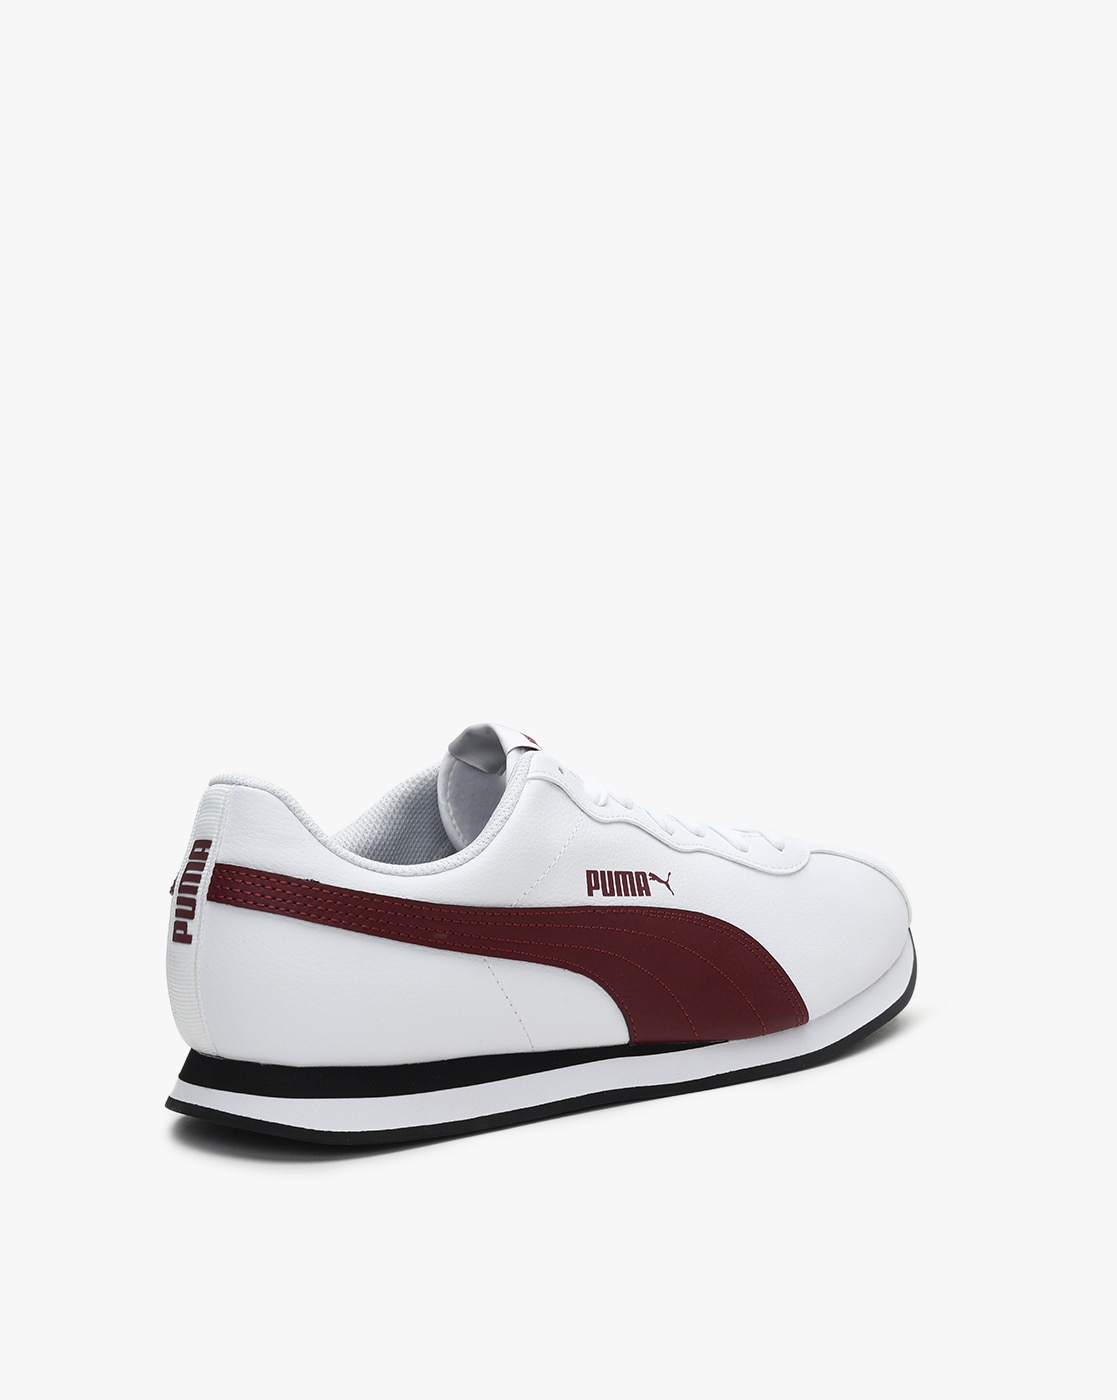 Buy Puma Turin II White Sneakers for Men at Best Price @ Tata CLiQ